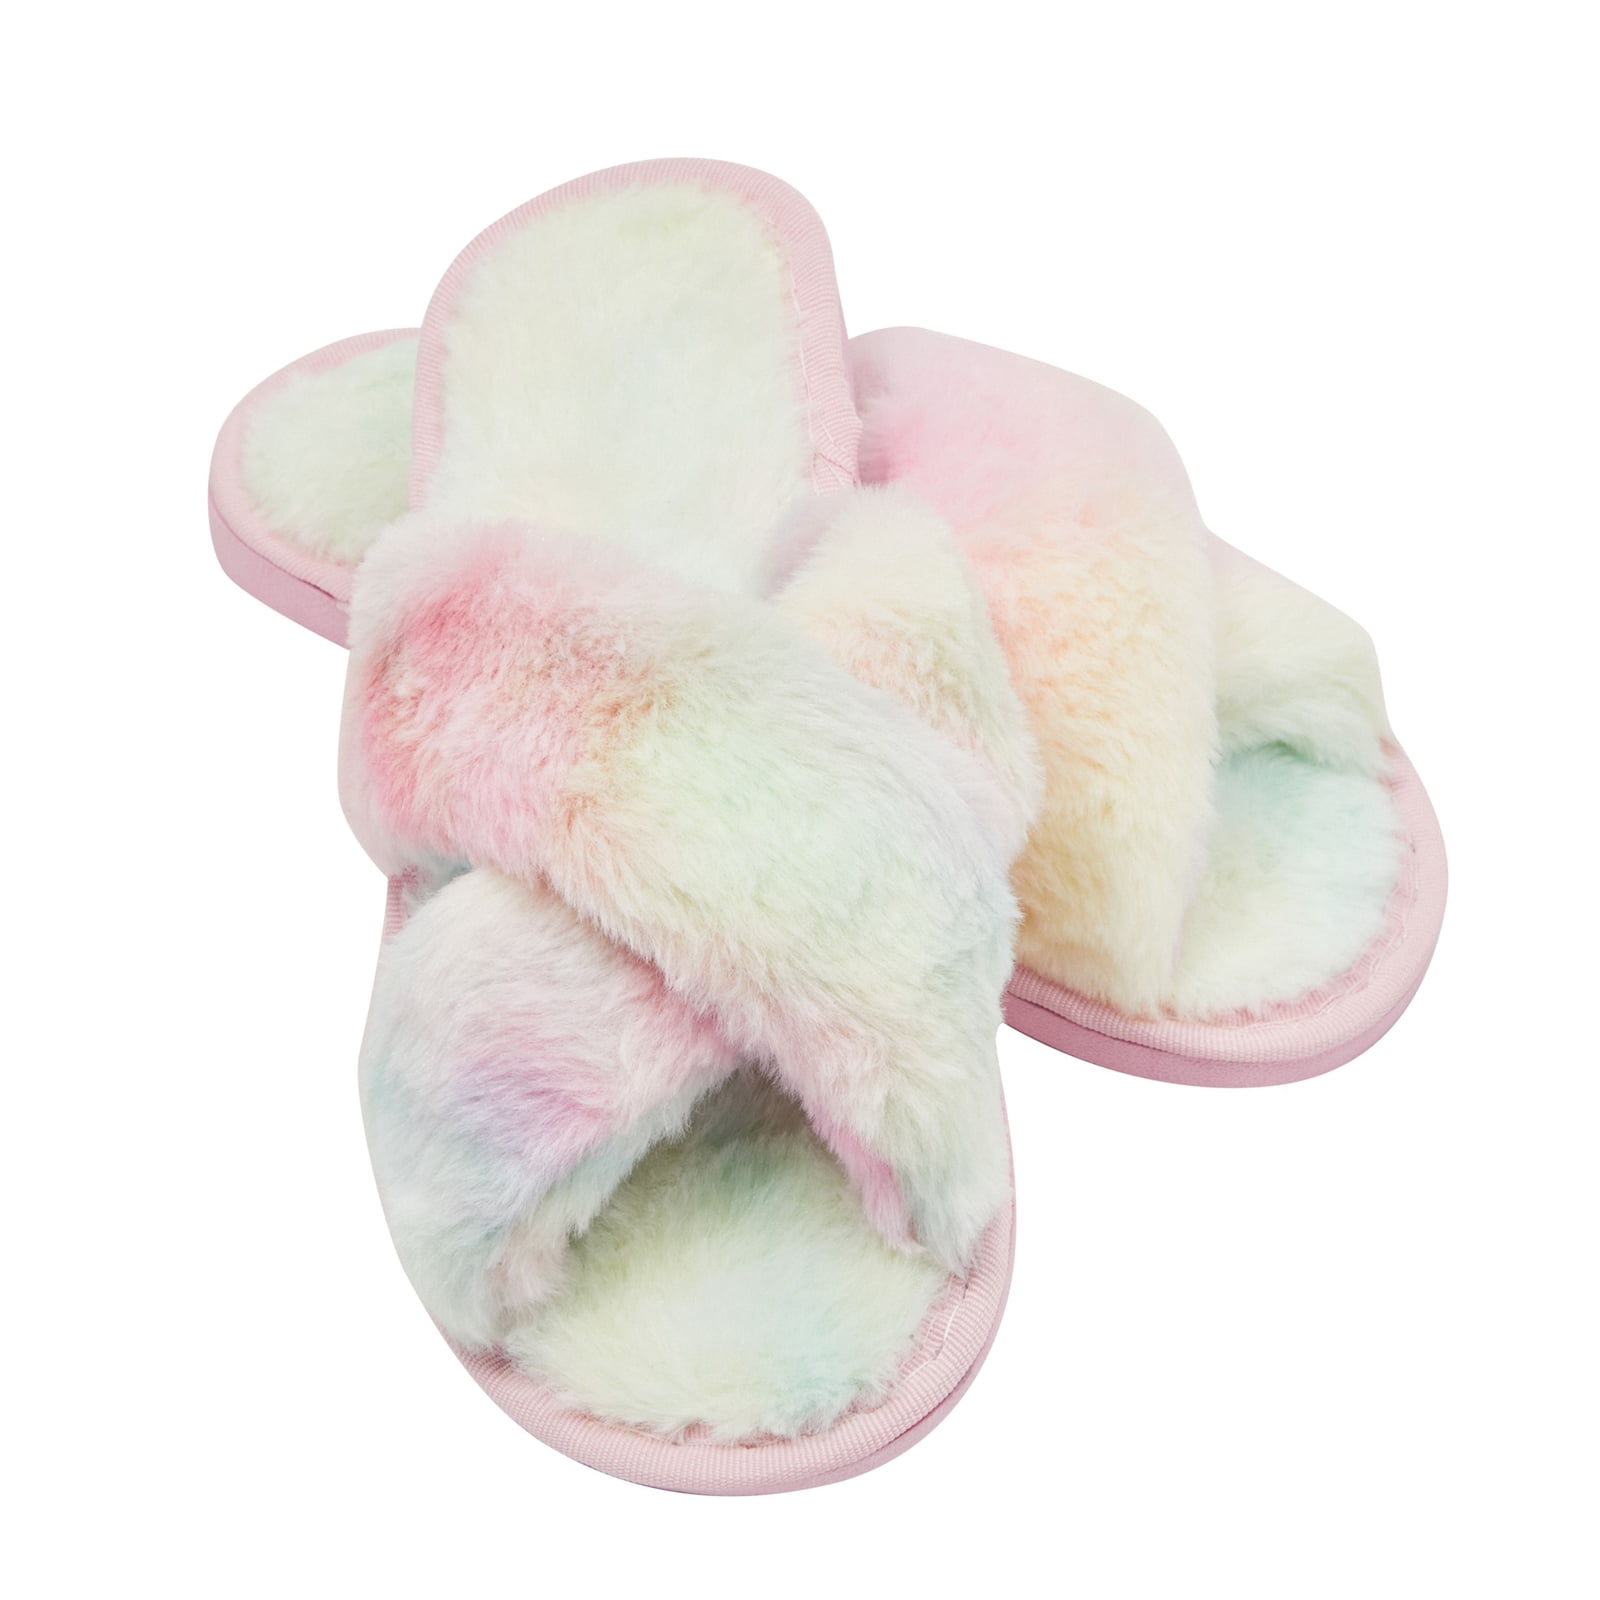 L-RUN Girls Fur Slide Slipper Furry Sandals Open Toe Fuzzy House Slippers Soft